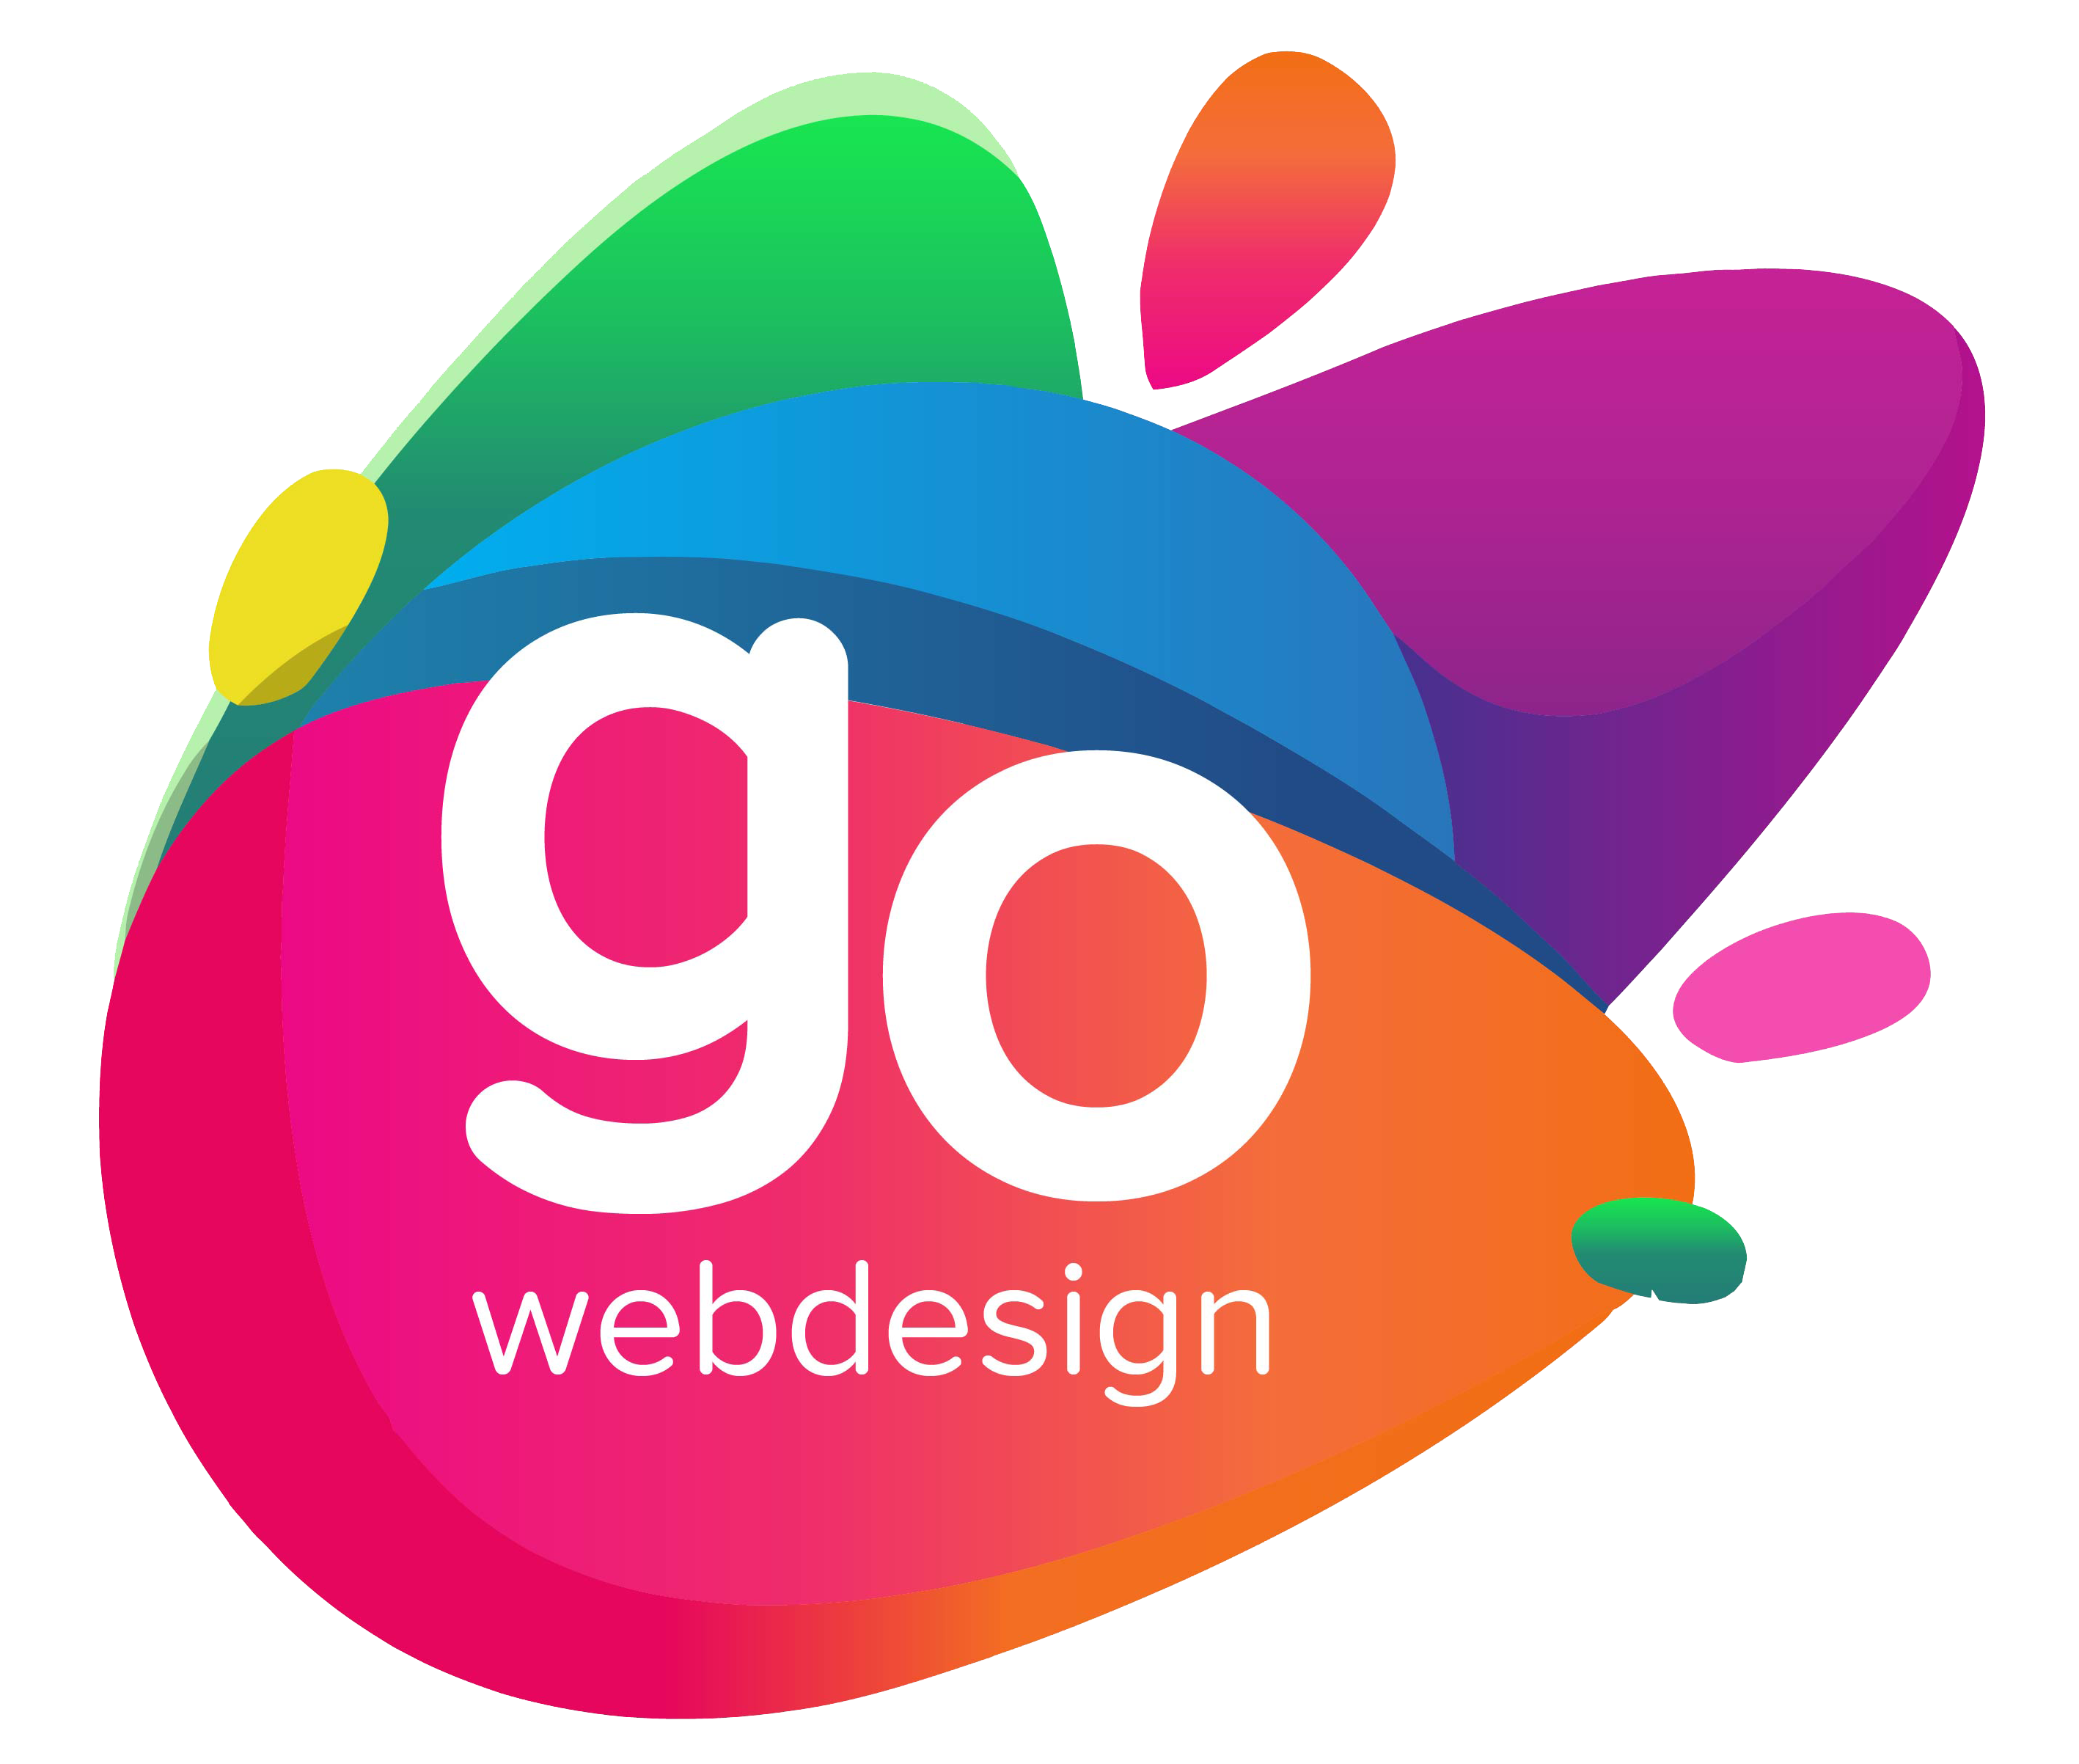 Go Web Design